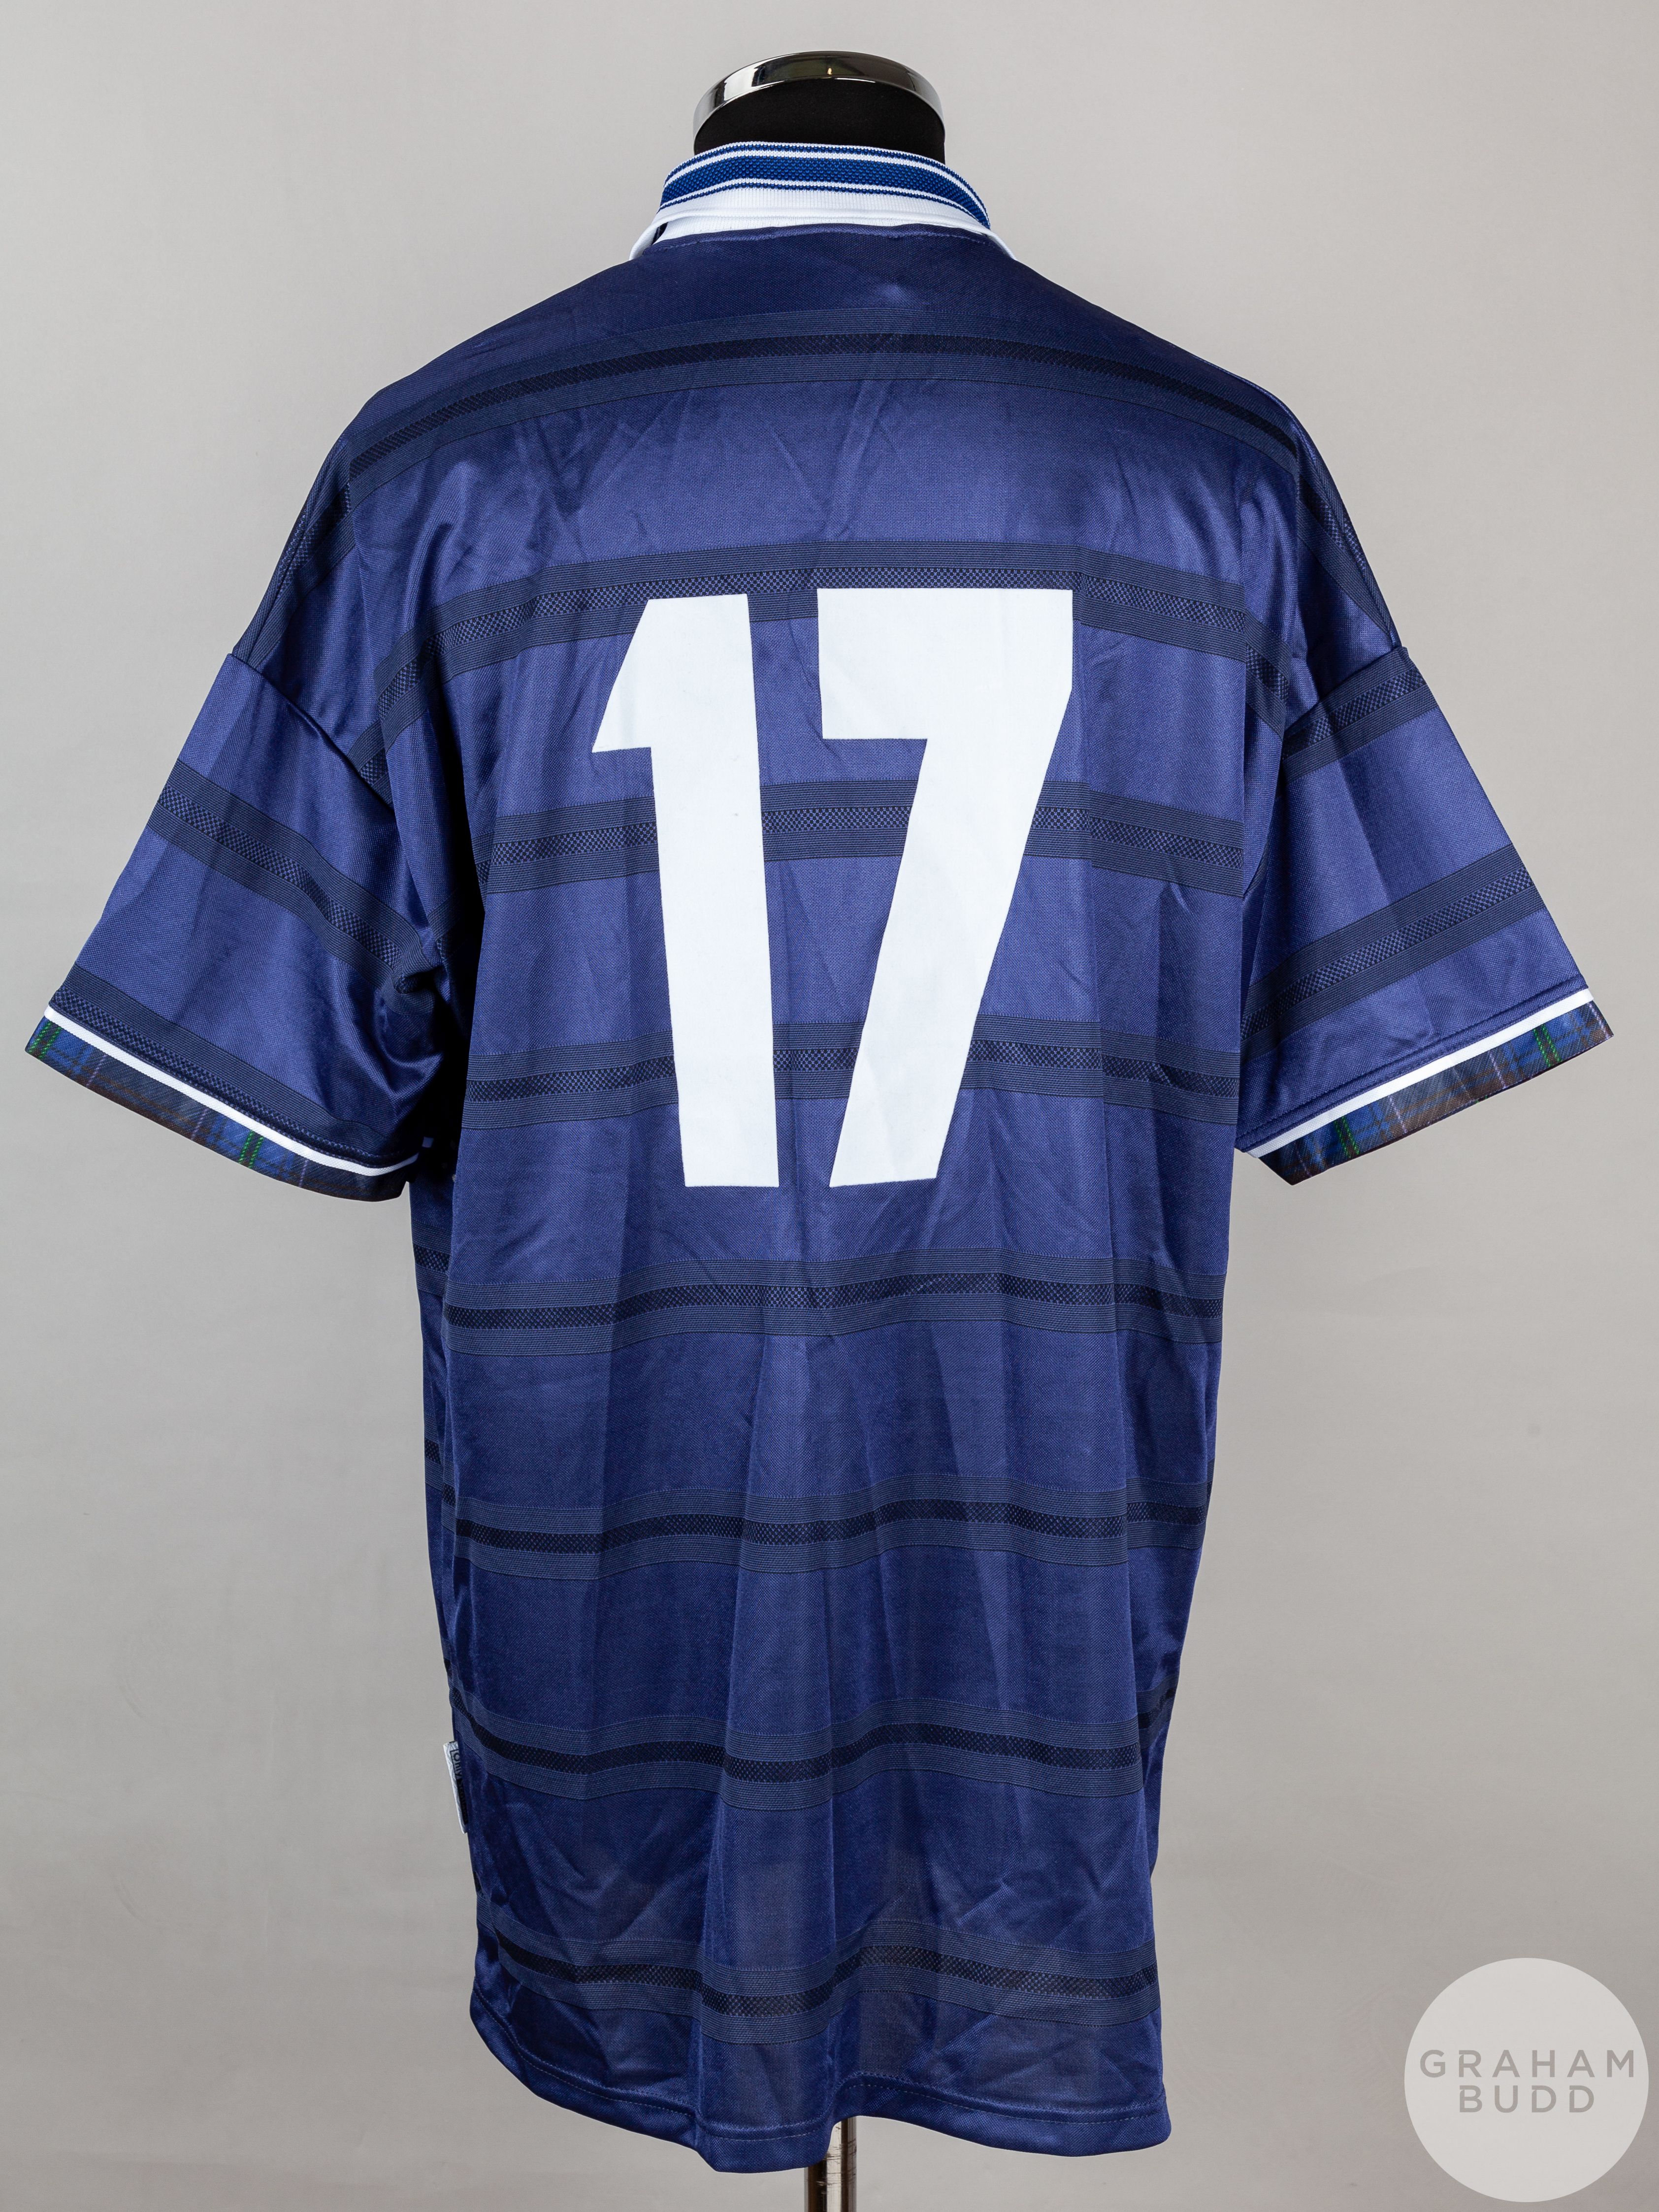 Blue and white No.17 Scotland international short-sleeved shirt, 1998-2000 - Image 2 of 7